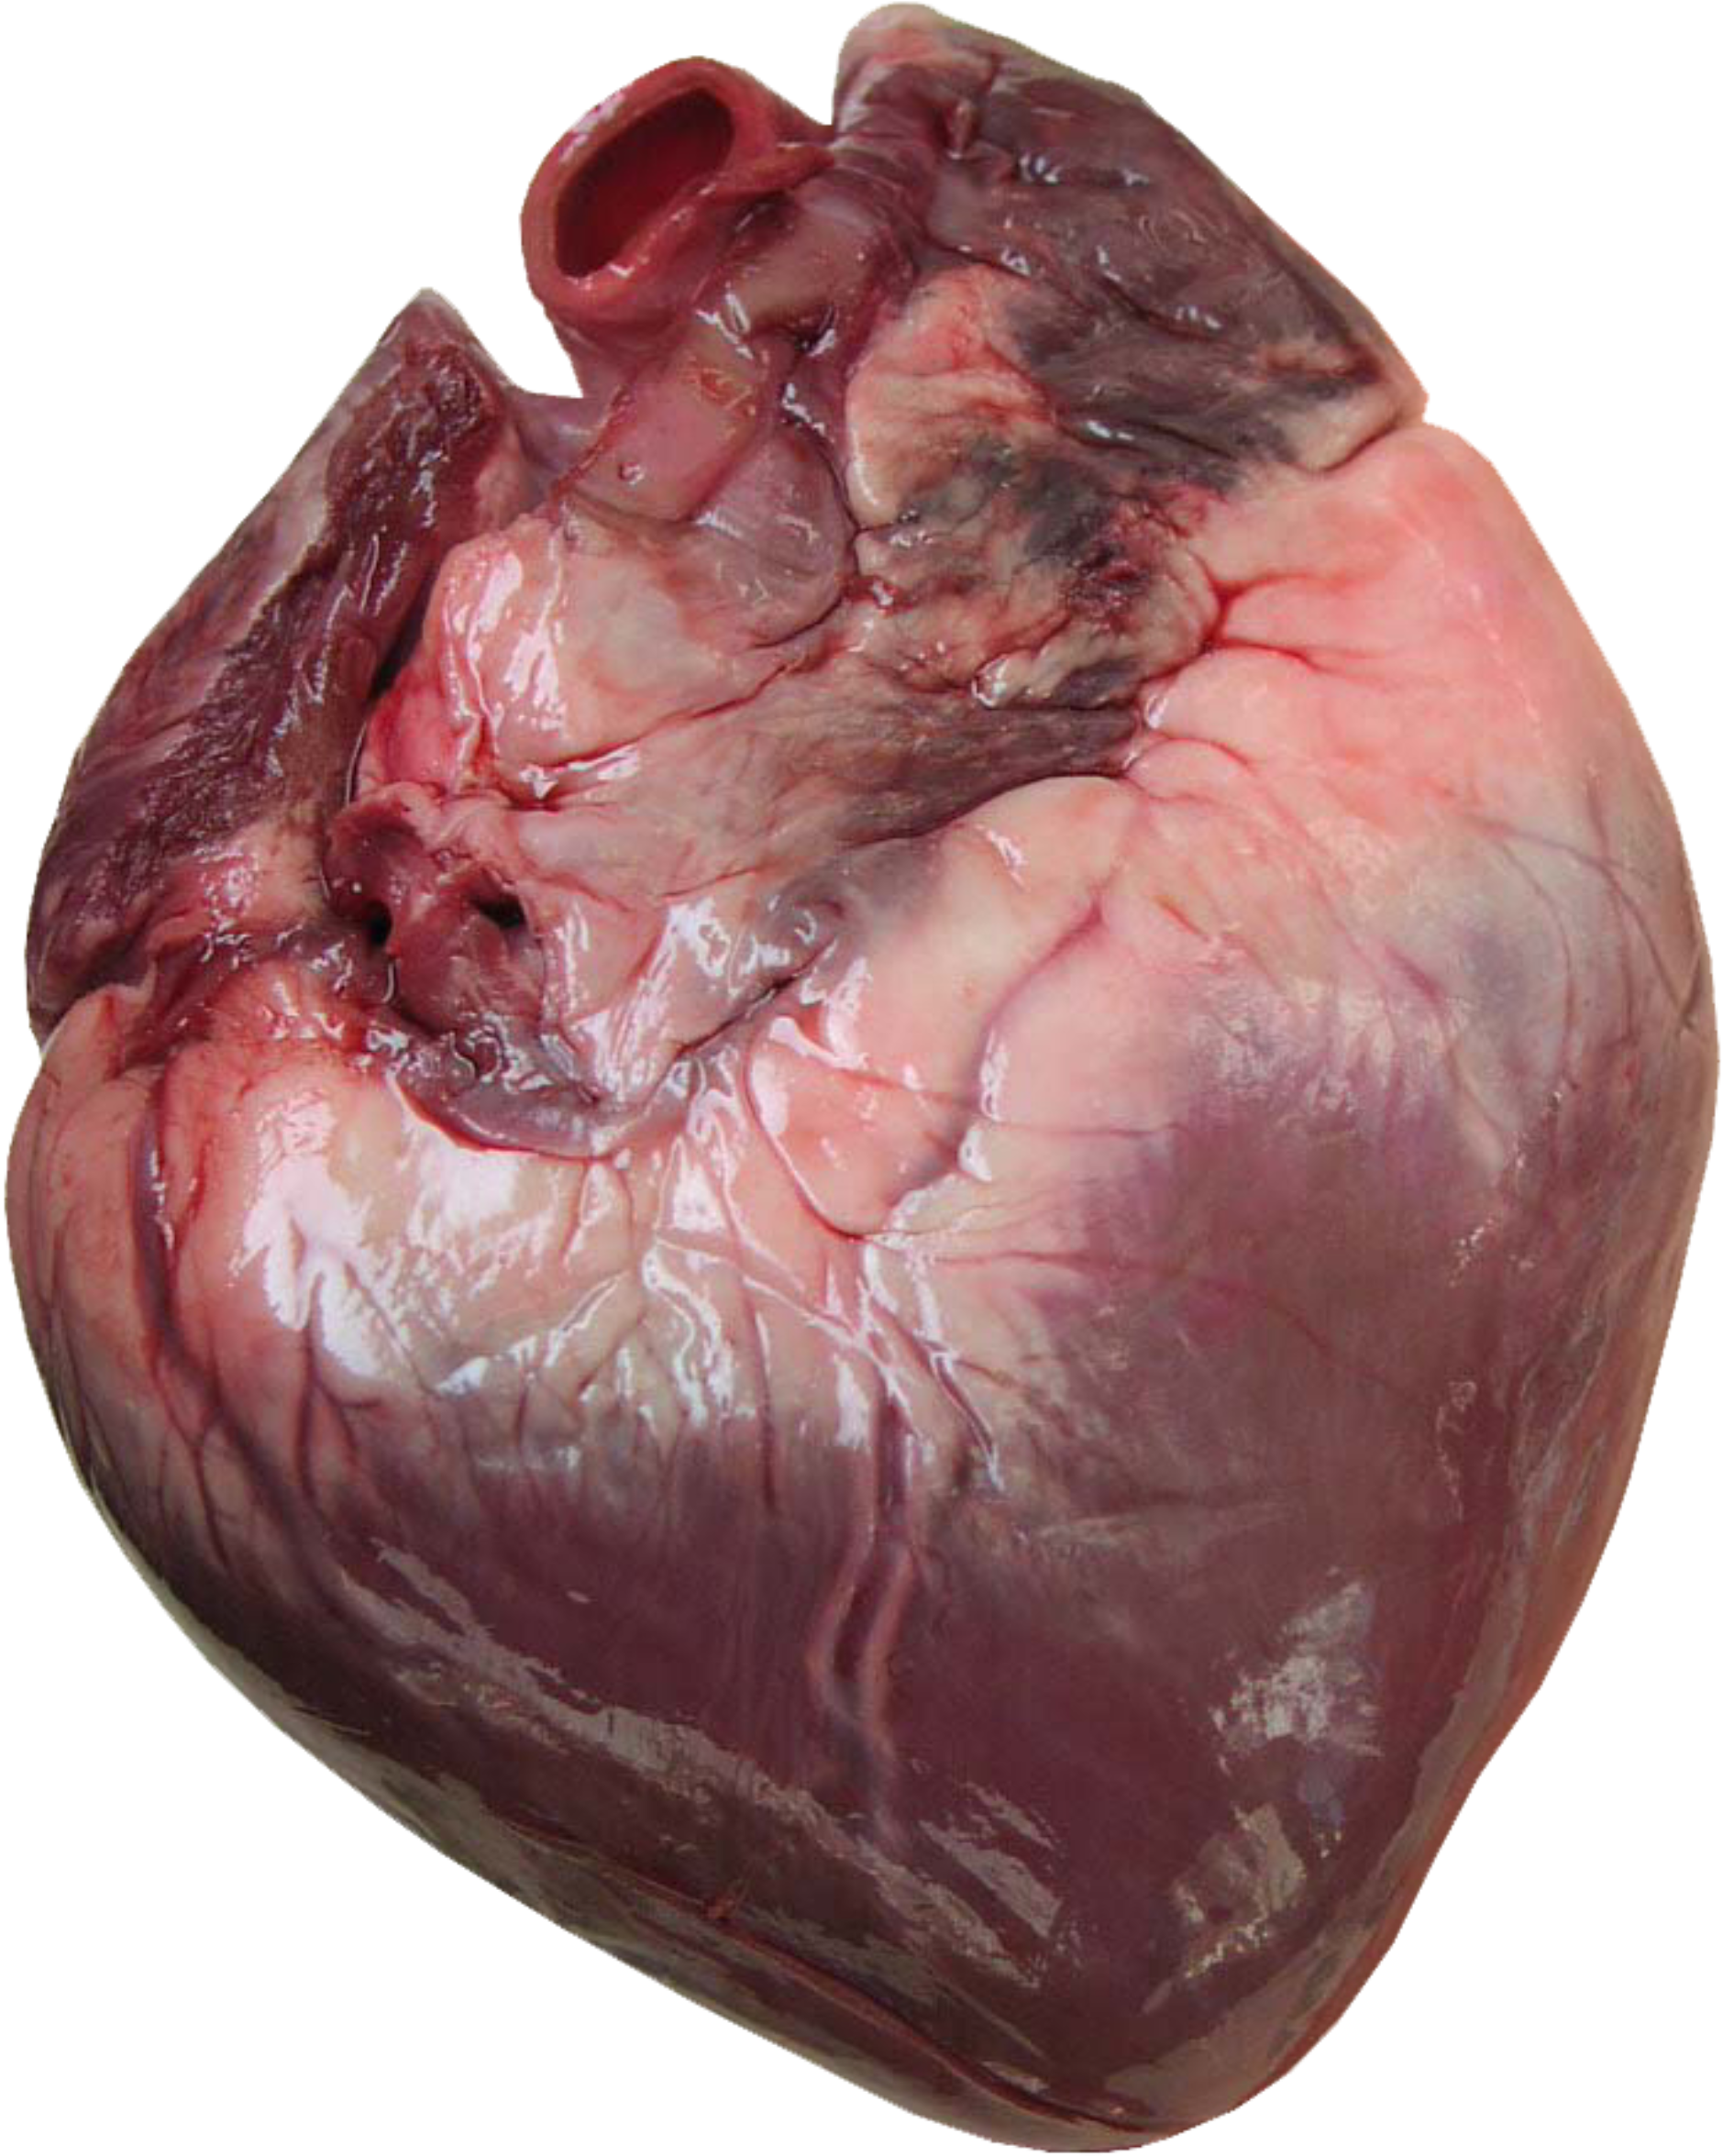 A Close Up Of A Heart